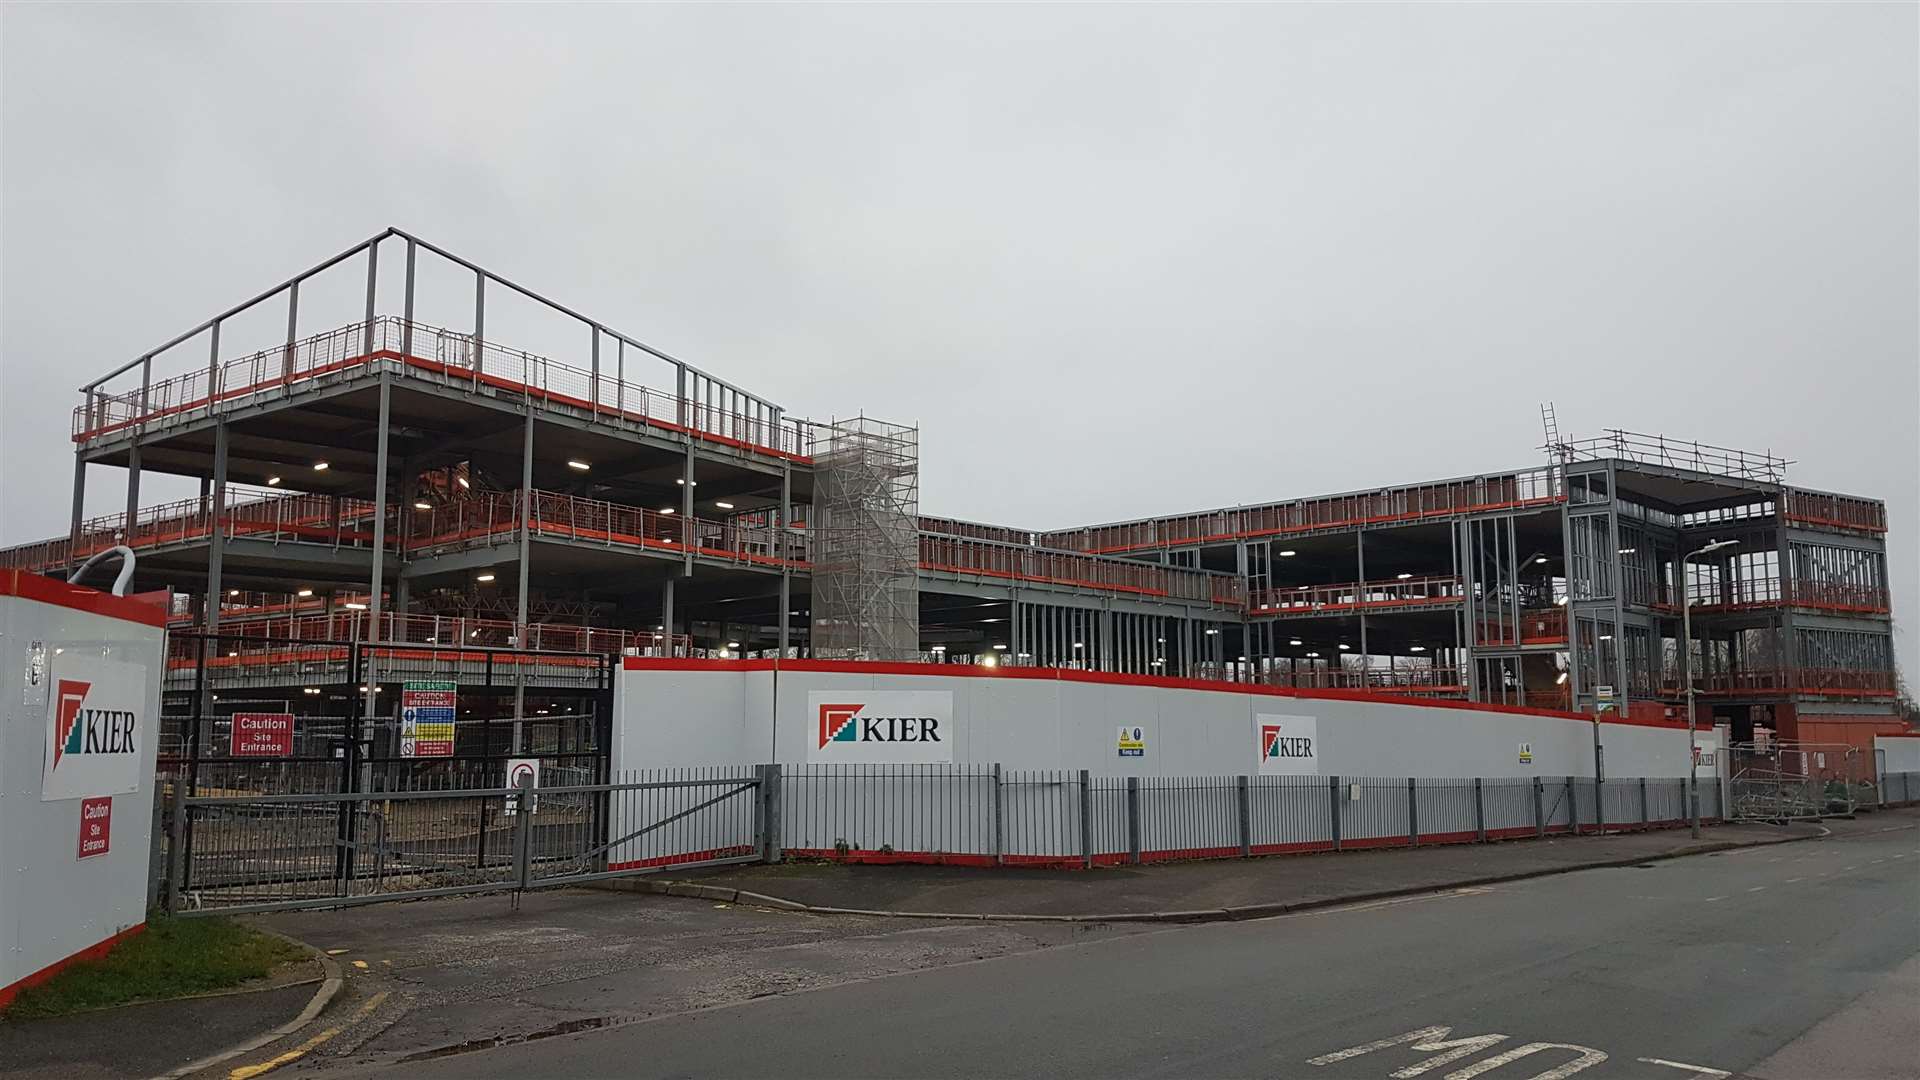 The new-build at Barton Manor School is progressing